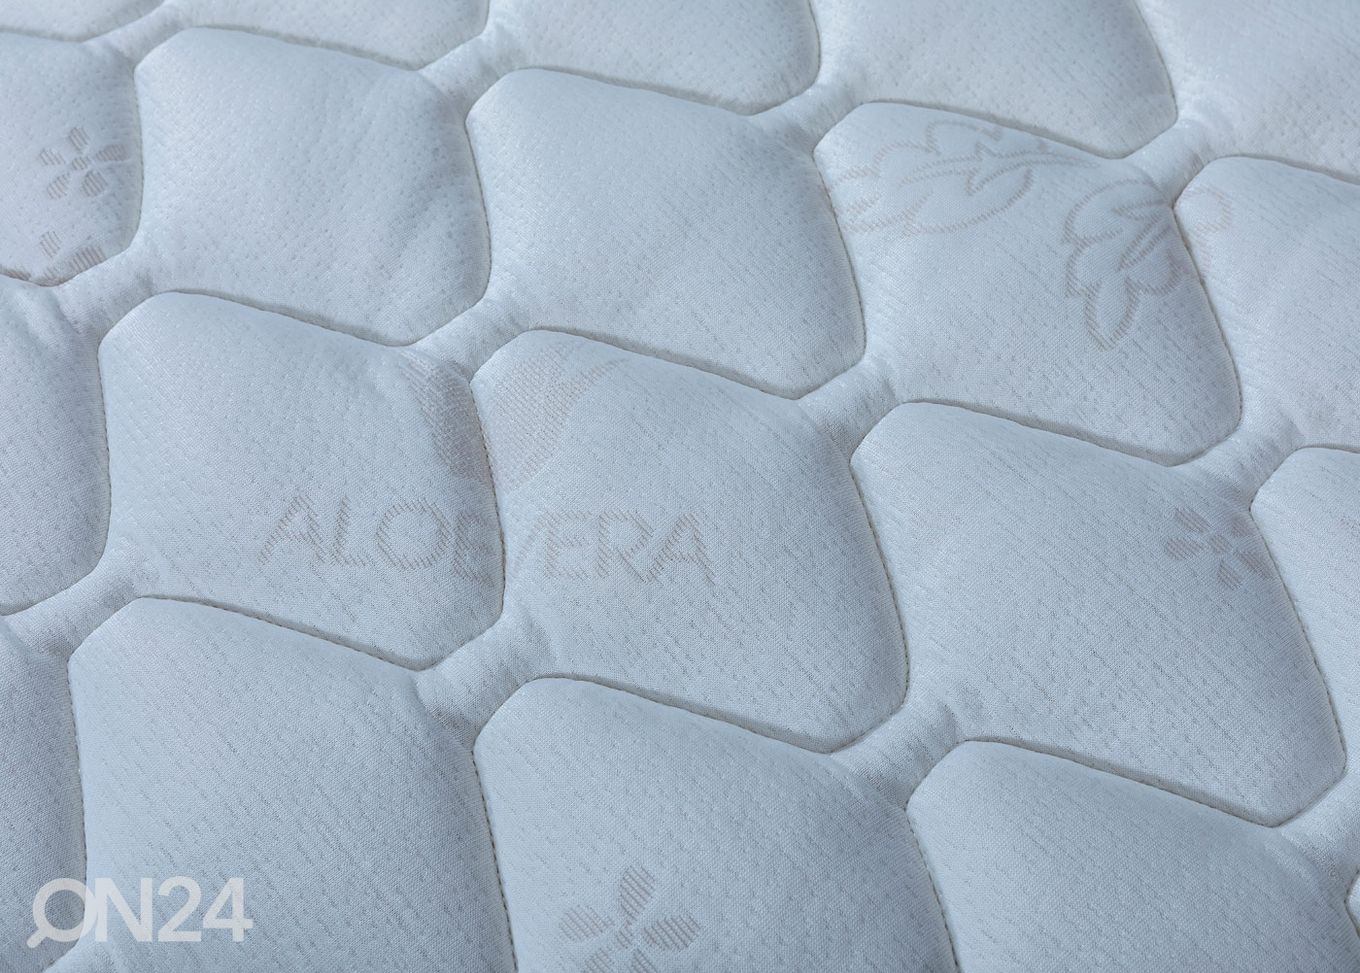 Stroma kattemadrats Top Comfort 160x190 cm suurendatud